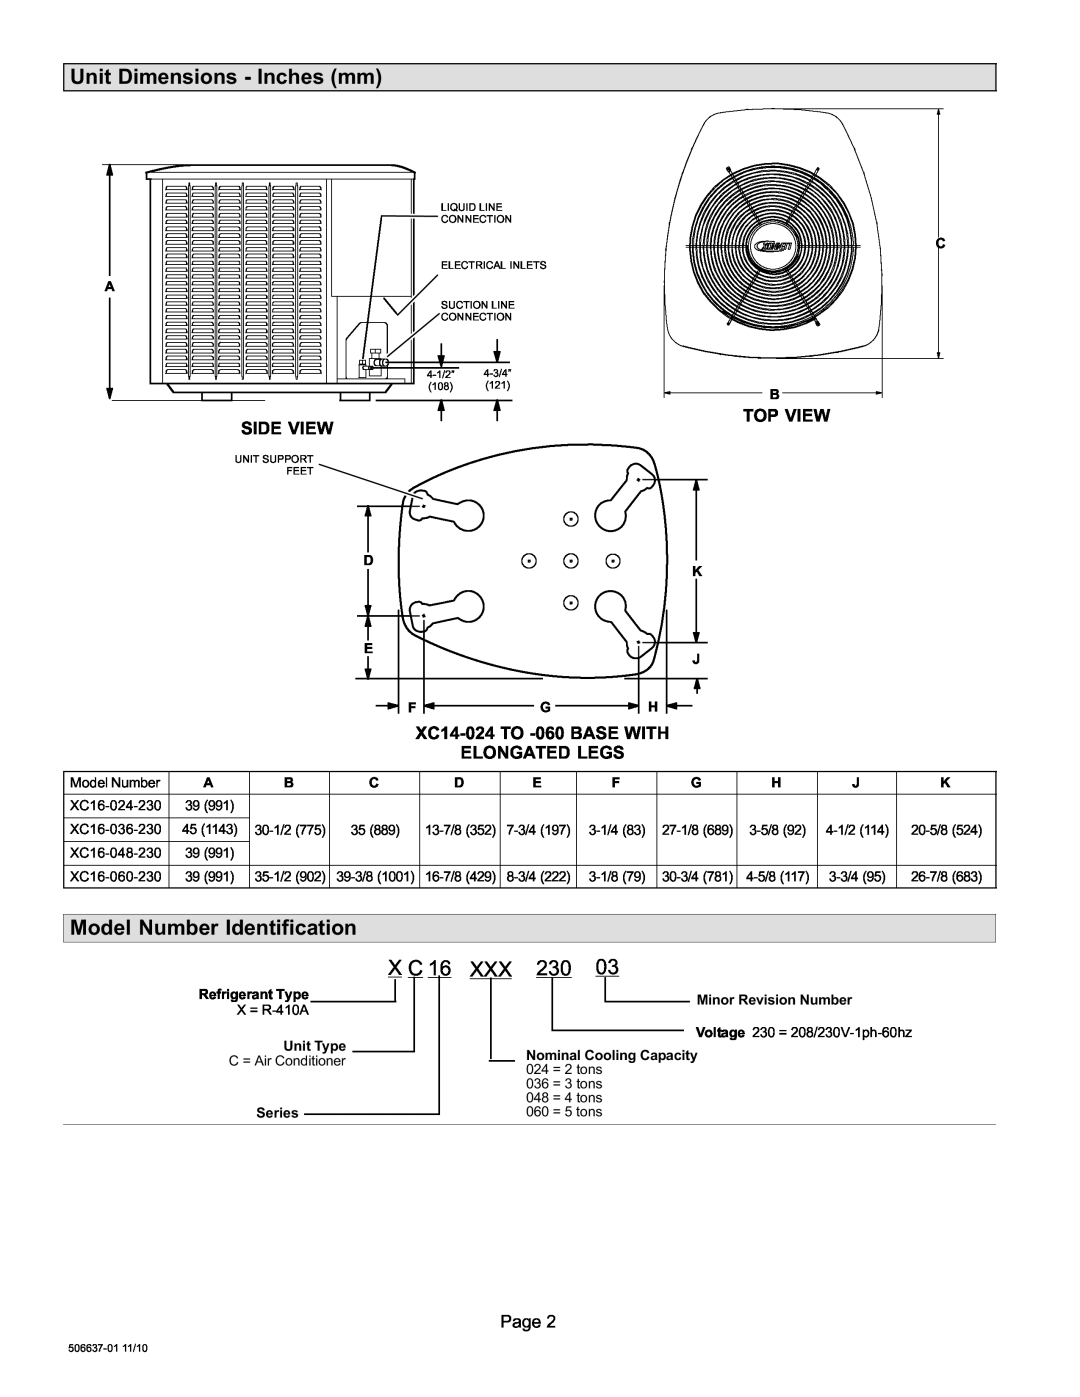 Lenox 506637-01, Elite Series X16 Air Conditioner Units Unit Dimensions − Inches mm, Model Number Identification, Xxx 